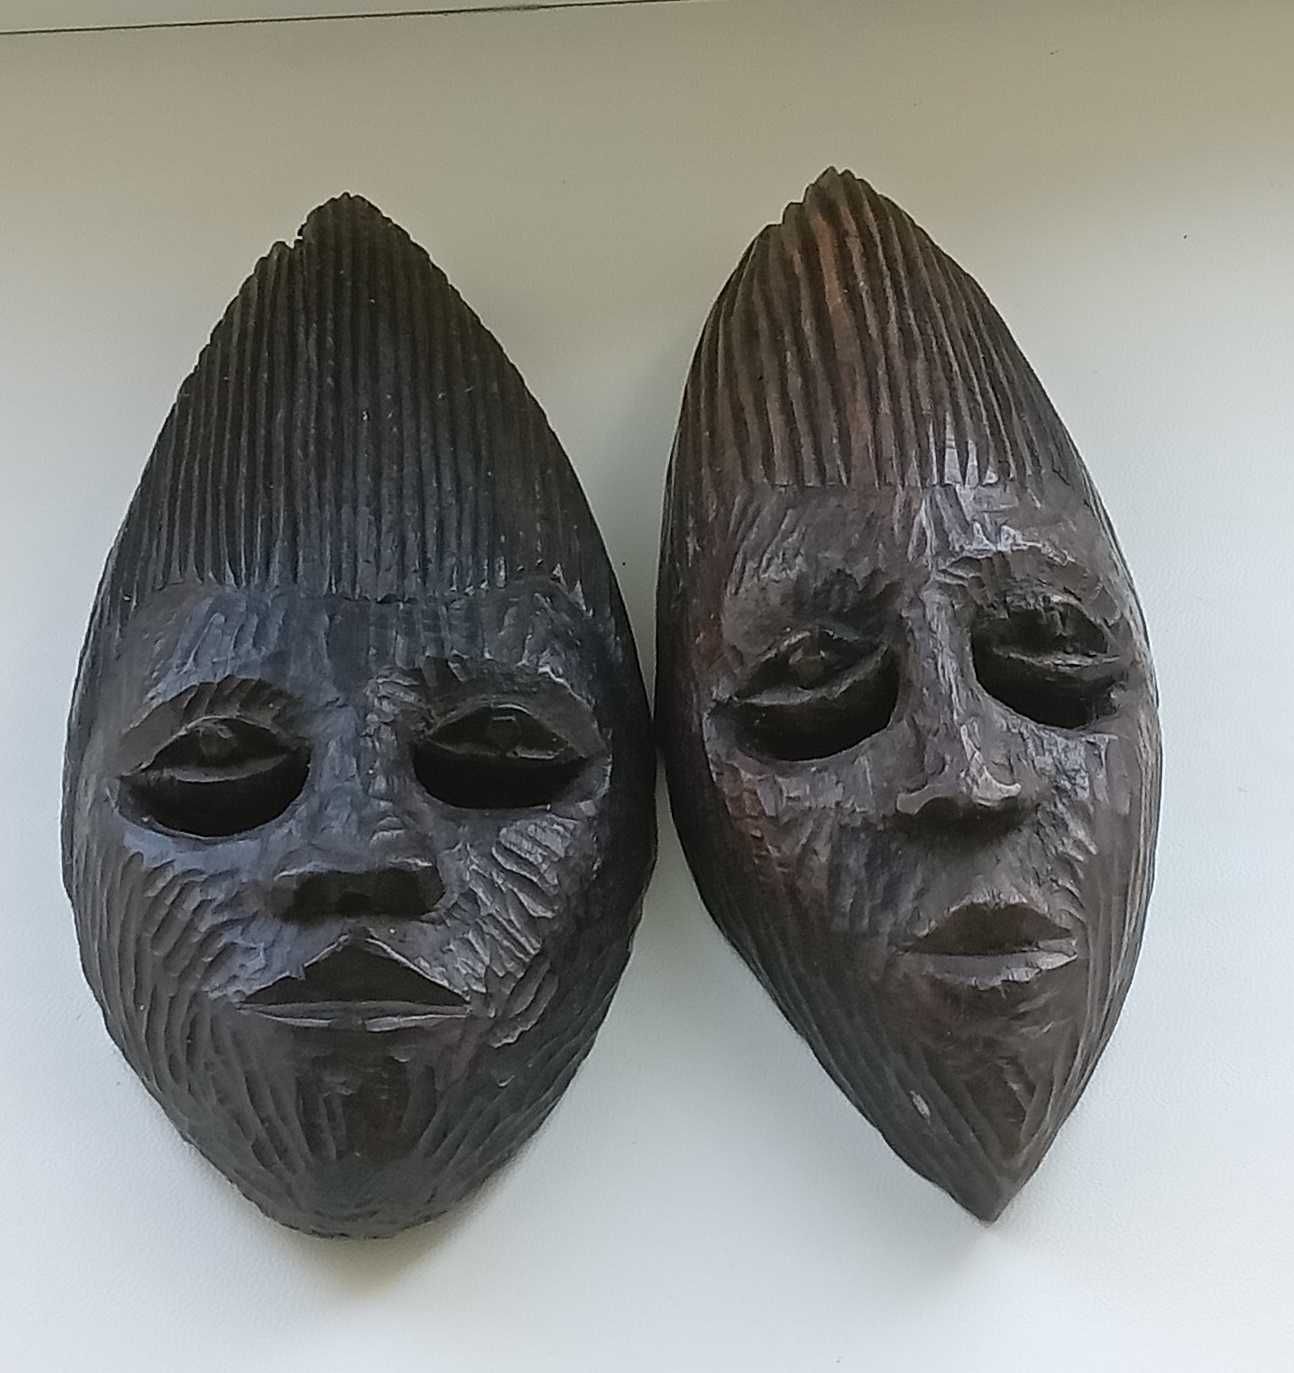 Afrykańskie maski